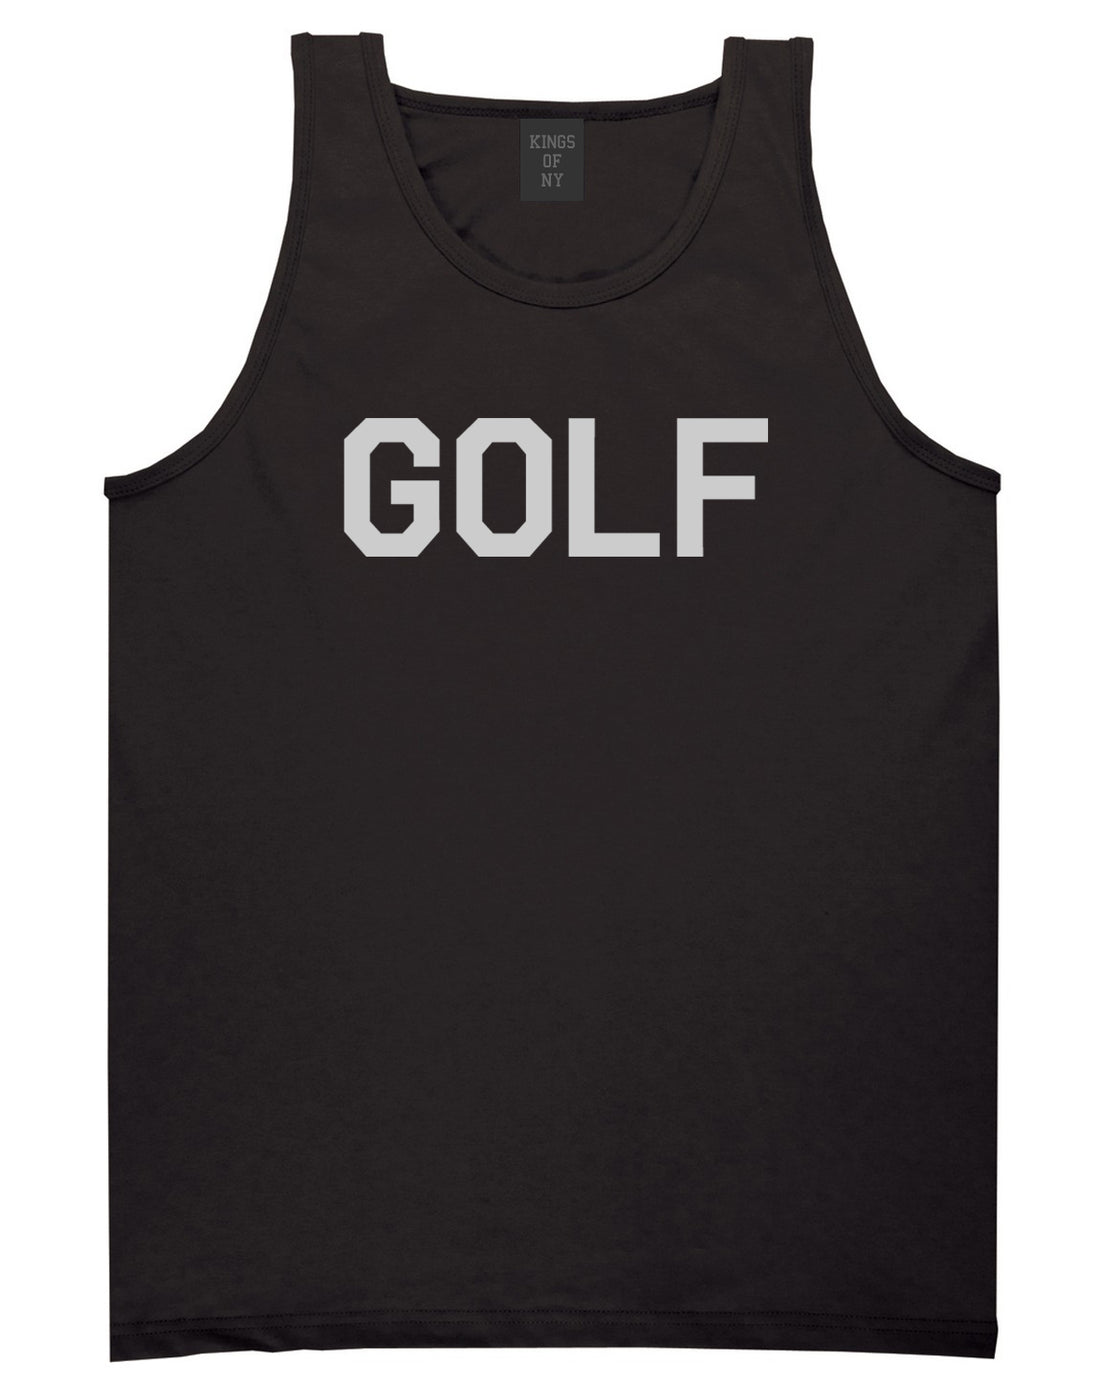 Golf Sport Mens Black Tank Top Shirt by KINGS OF NY